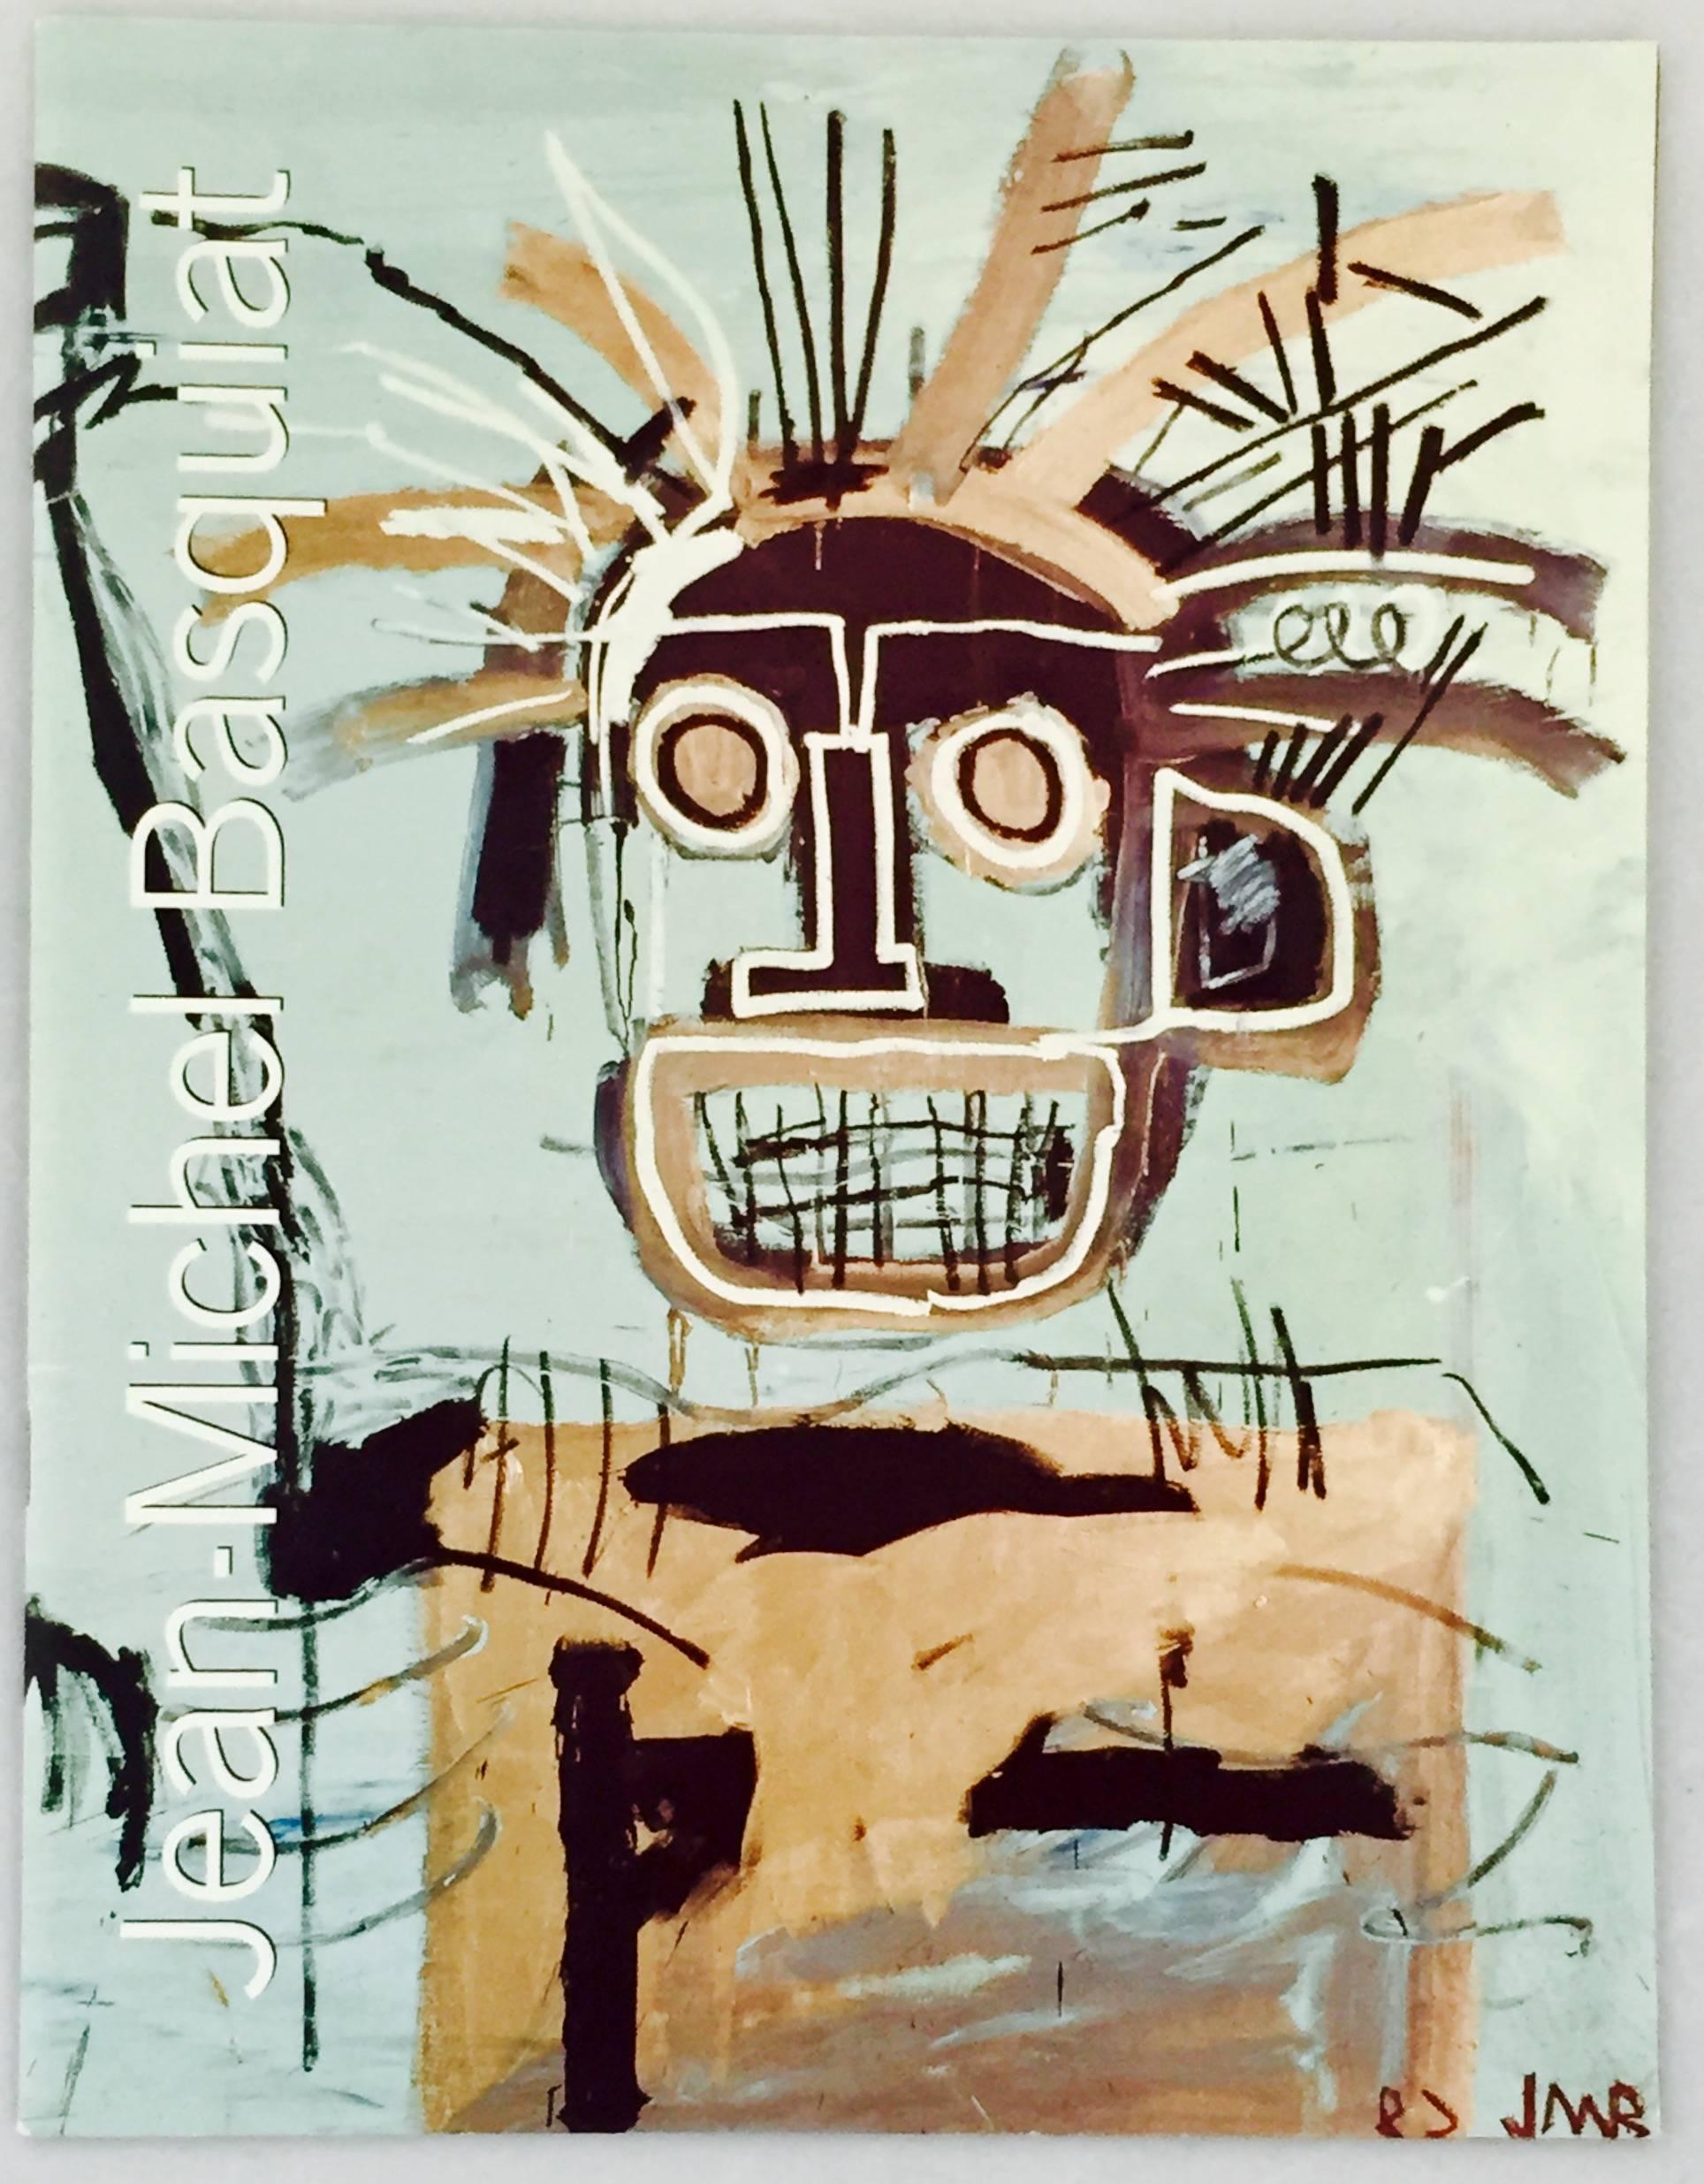 Basquiat at Serpentine Gallery, London (Exhibition Catalogue) - Art by (after) Jean-Michel Basquiat